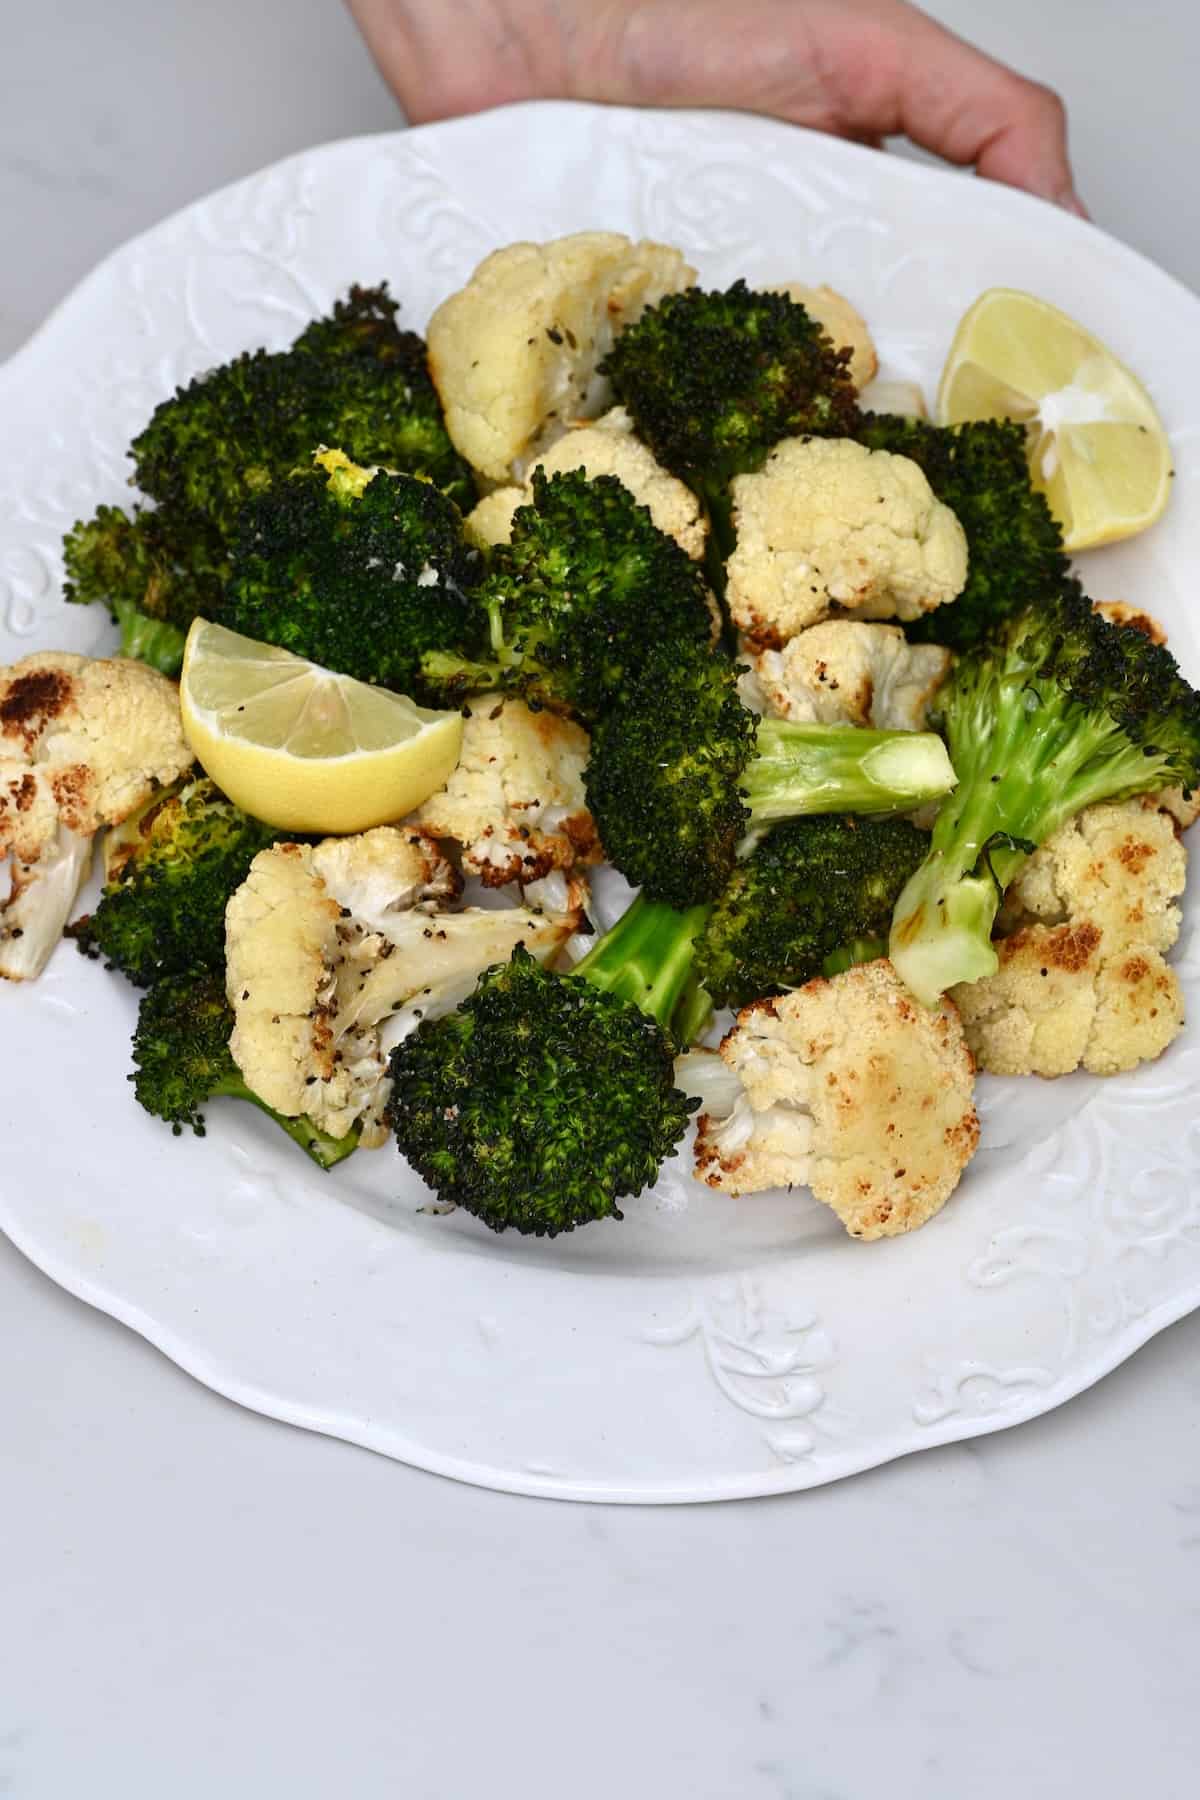 Roasted cauliflower and broccoli on a plate